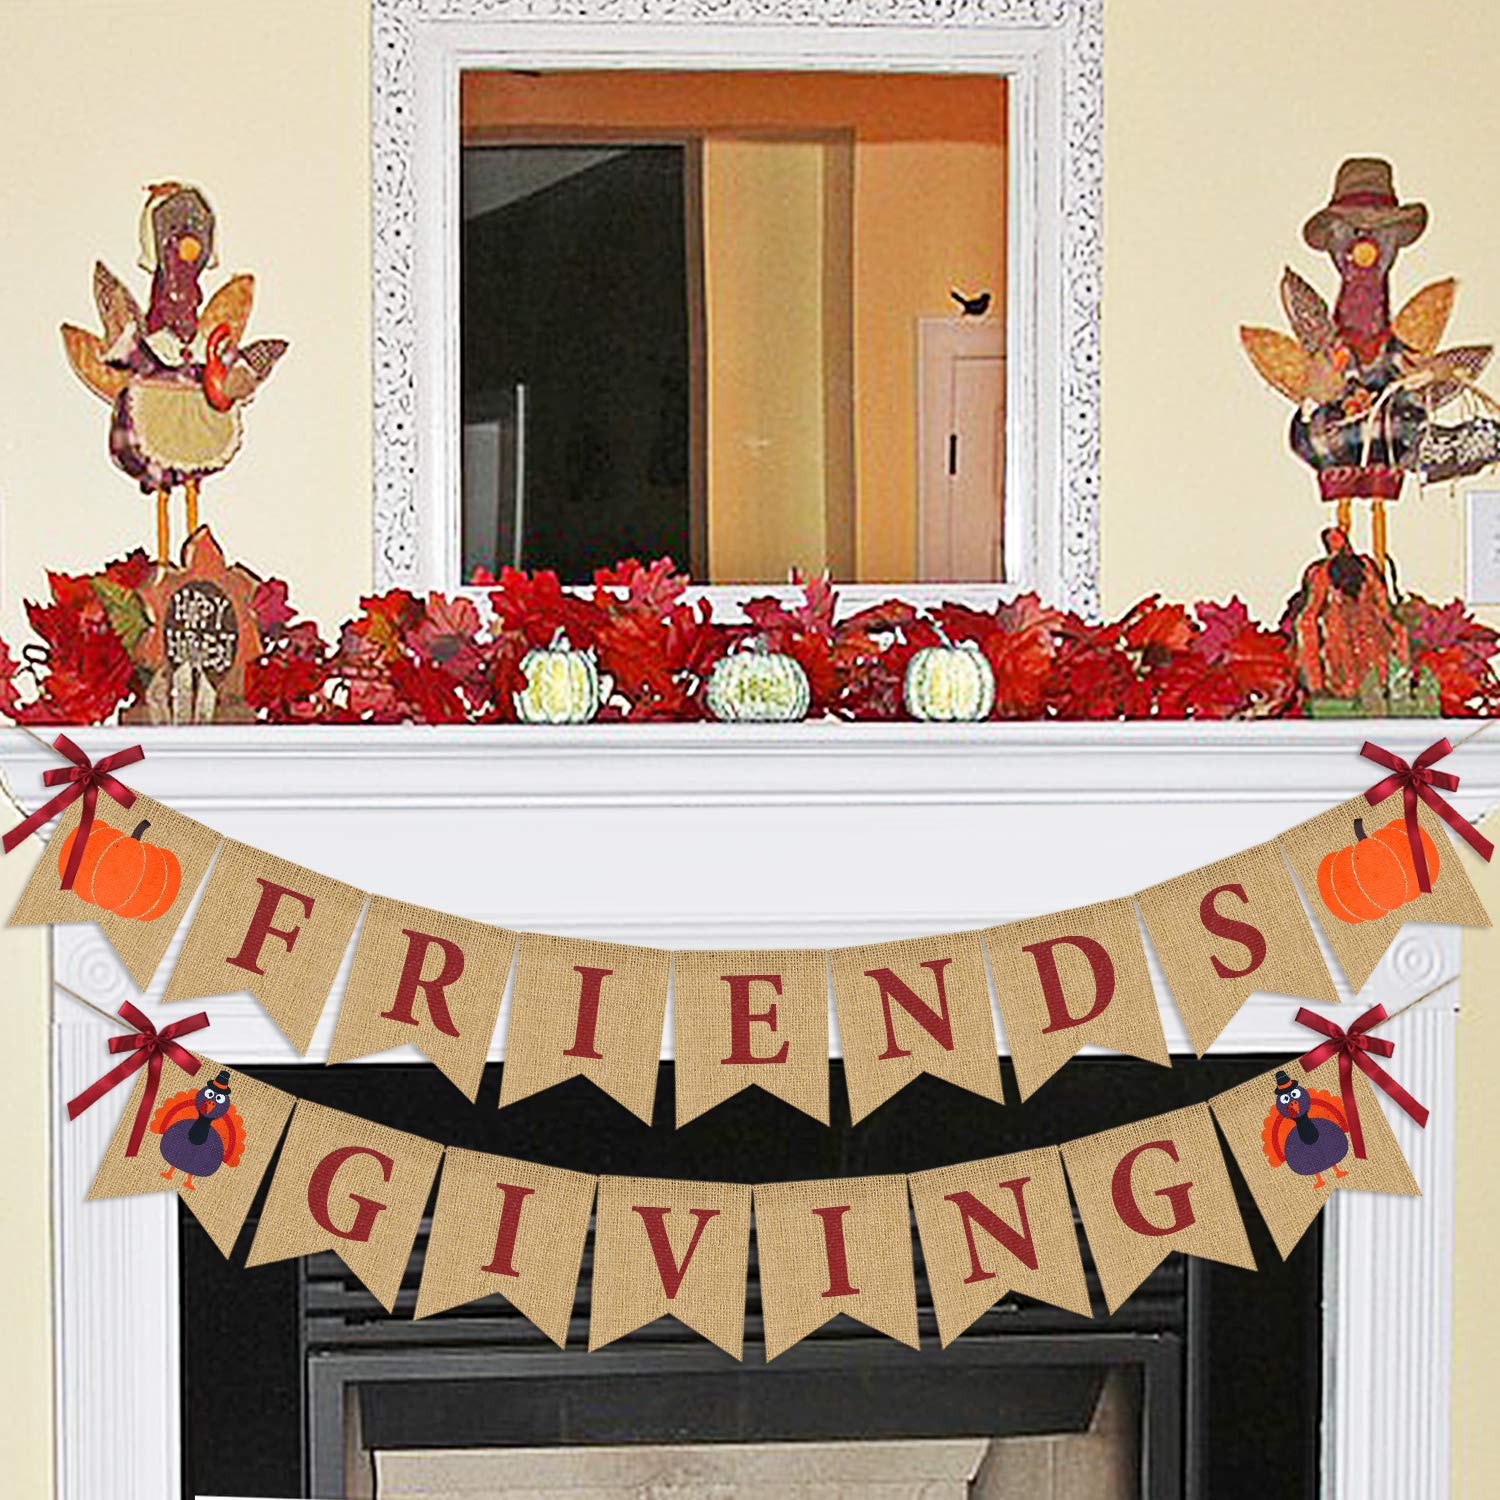 Friendsgiving Banner Burlap | Thanksgiving Decorations | ThanksGiving Burlap Banner | Rustic Thanksgiving Friends Giving Turkey Pumpkin Bunting | Thanksgiving Party Supplies Fireplace Mantle Decor